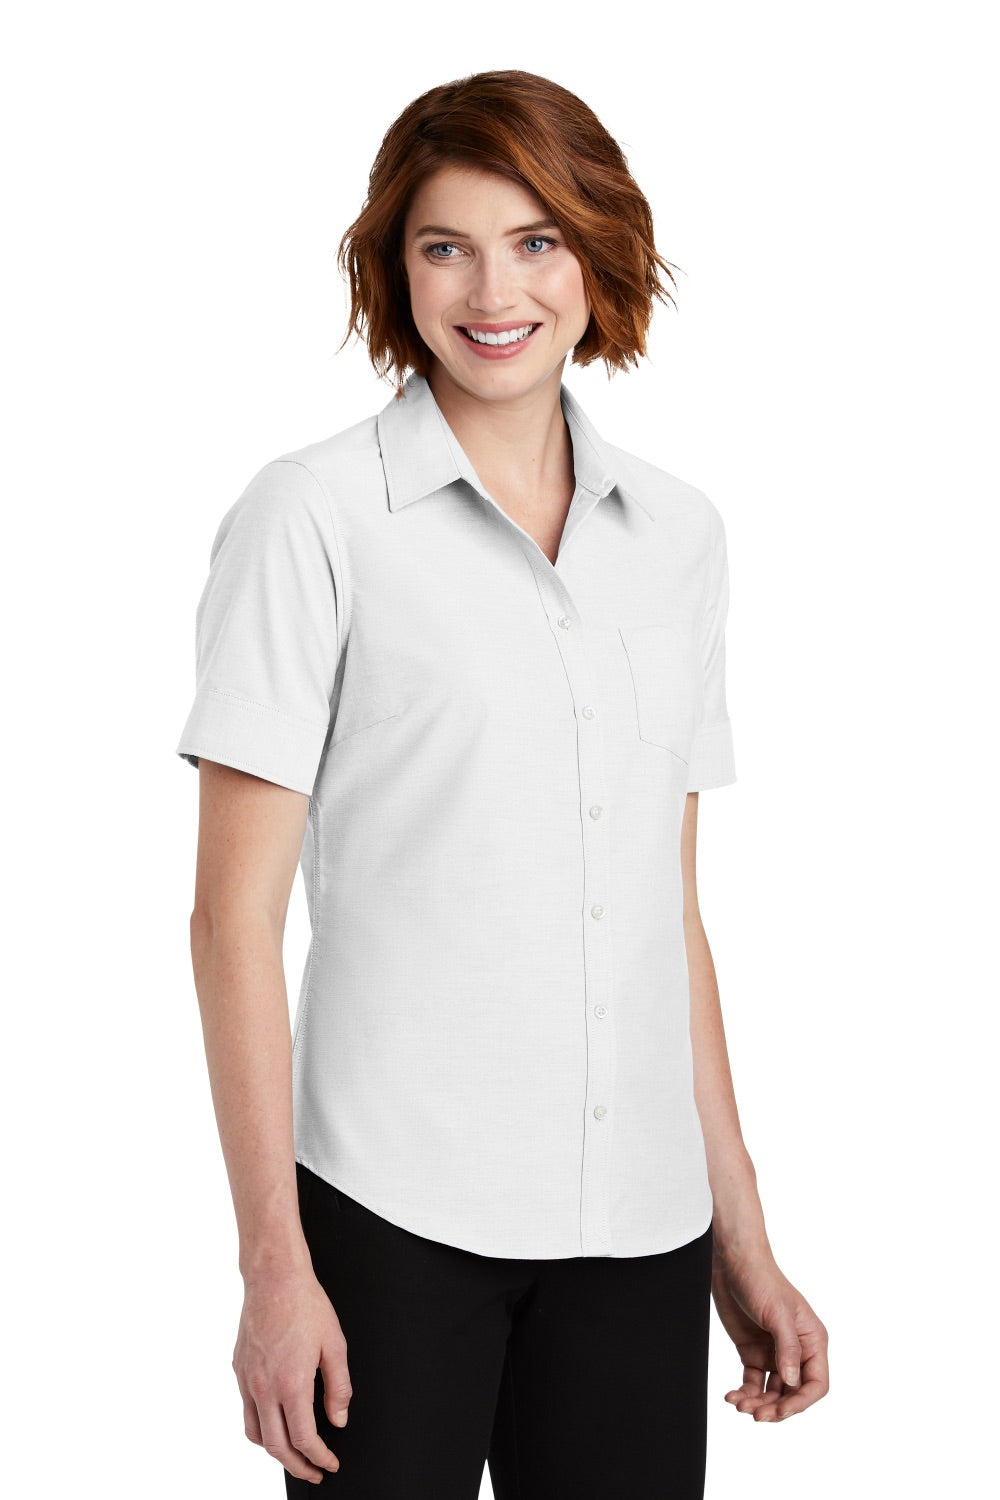 Port Authority L659 Womens SuperPro Oxford Wrinkle Resistant Short Sleeve Button Down Shirt w/ Pocket White 3Q